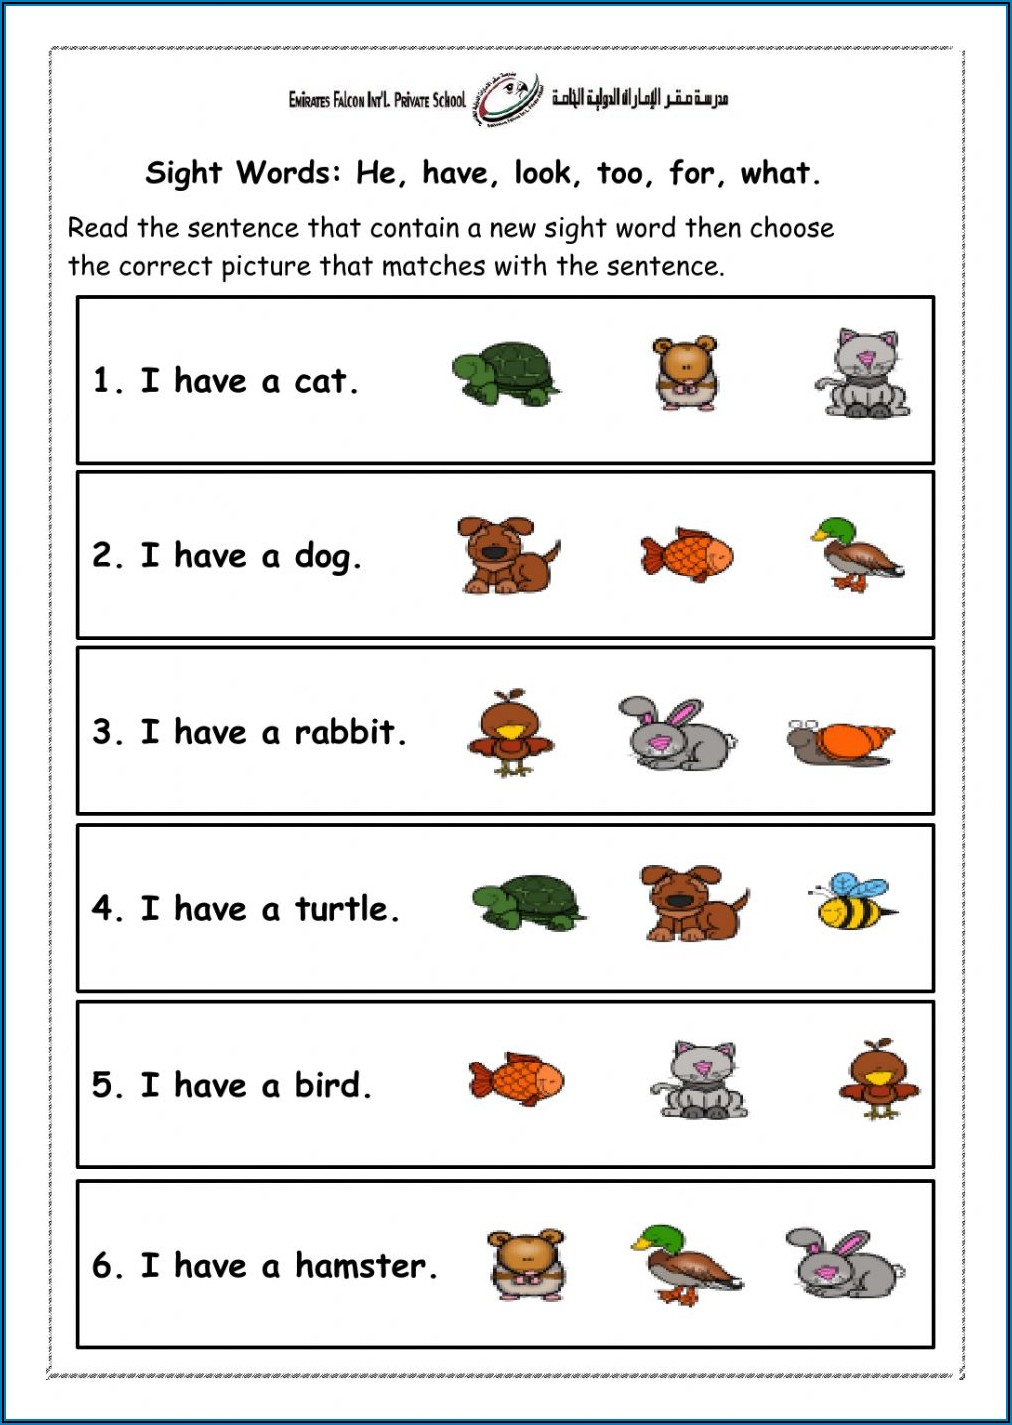 Worksheet On Sight Words For Grade 1